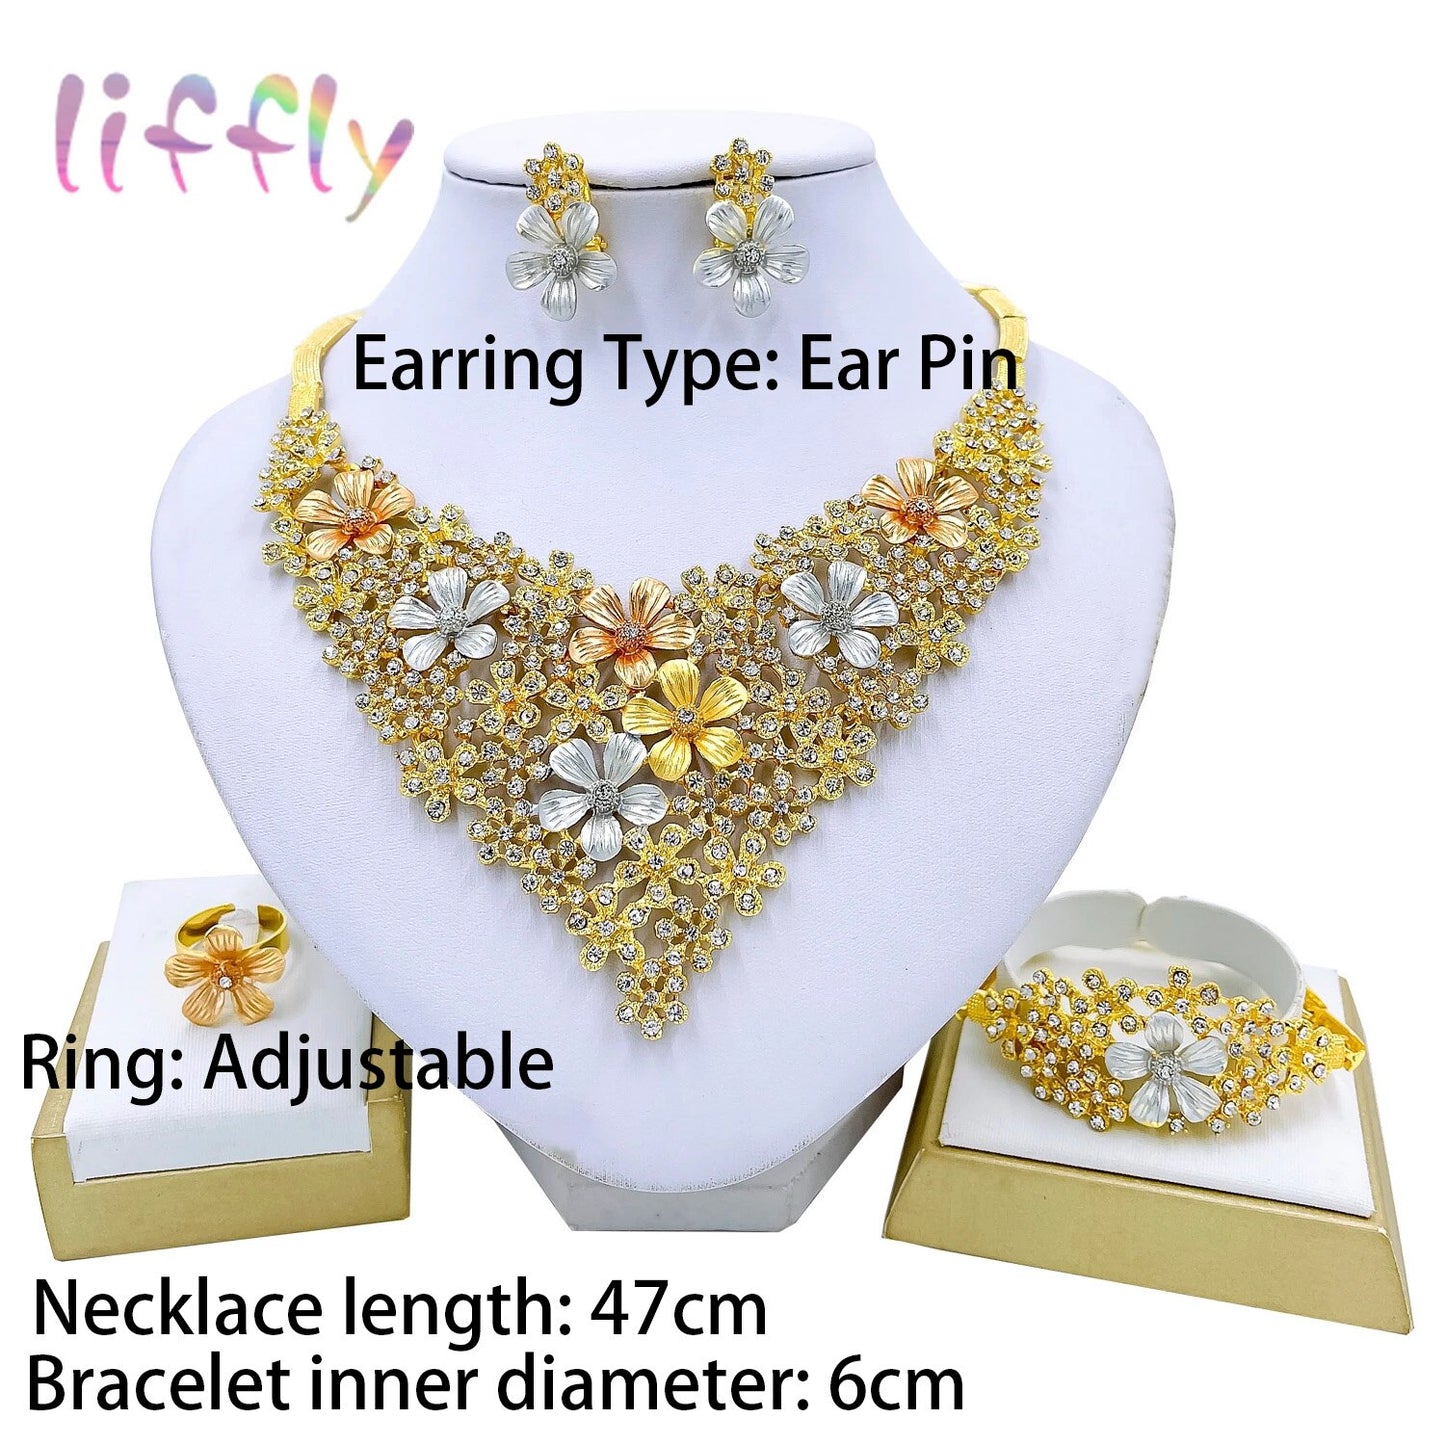 Liffly Dubai Elegant Bridal Wedding Jewelry Flower Necklace Bracelet Earrings Ring African Fashion Jewelry Sets Women Gift